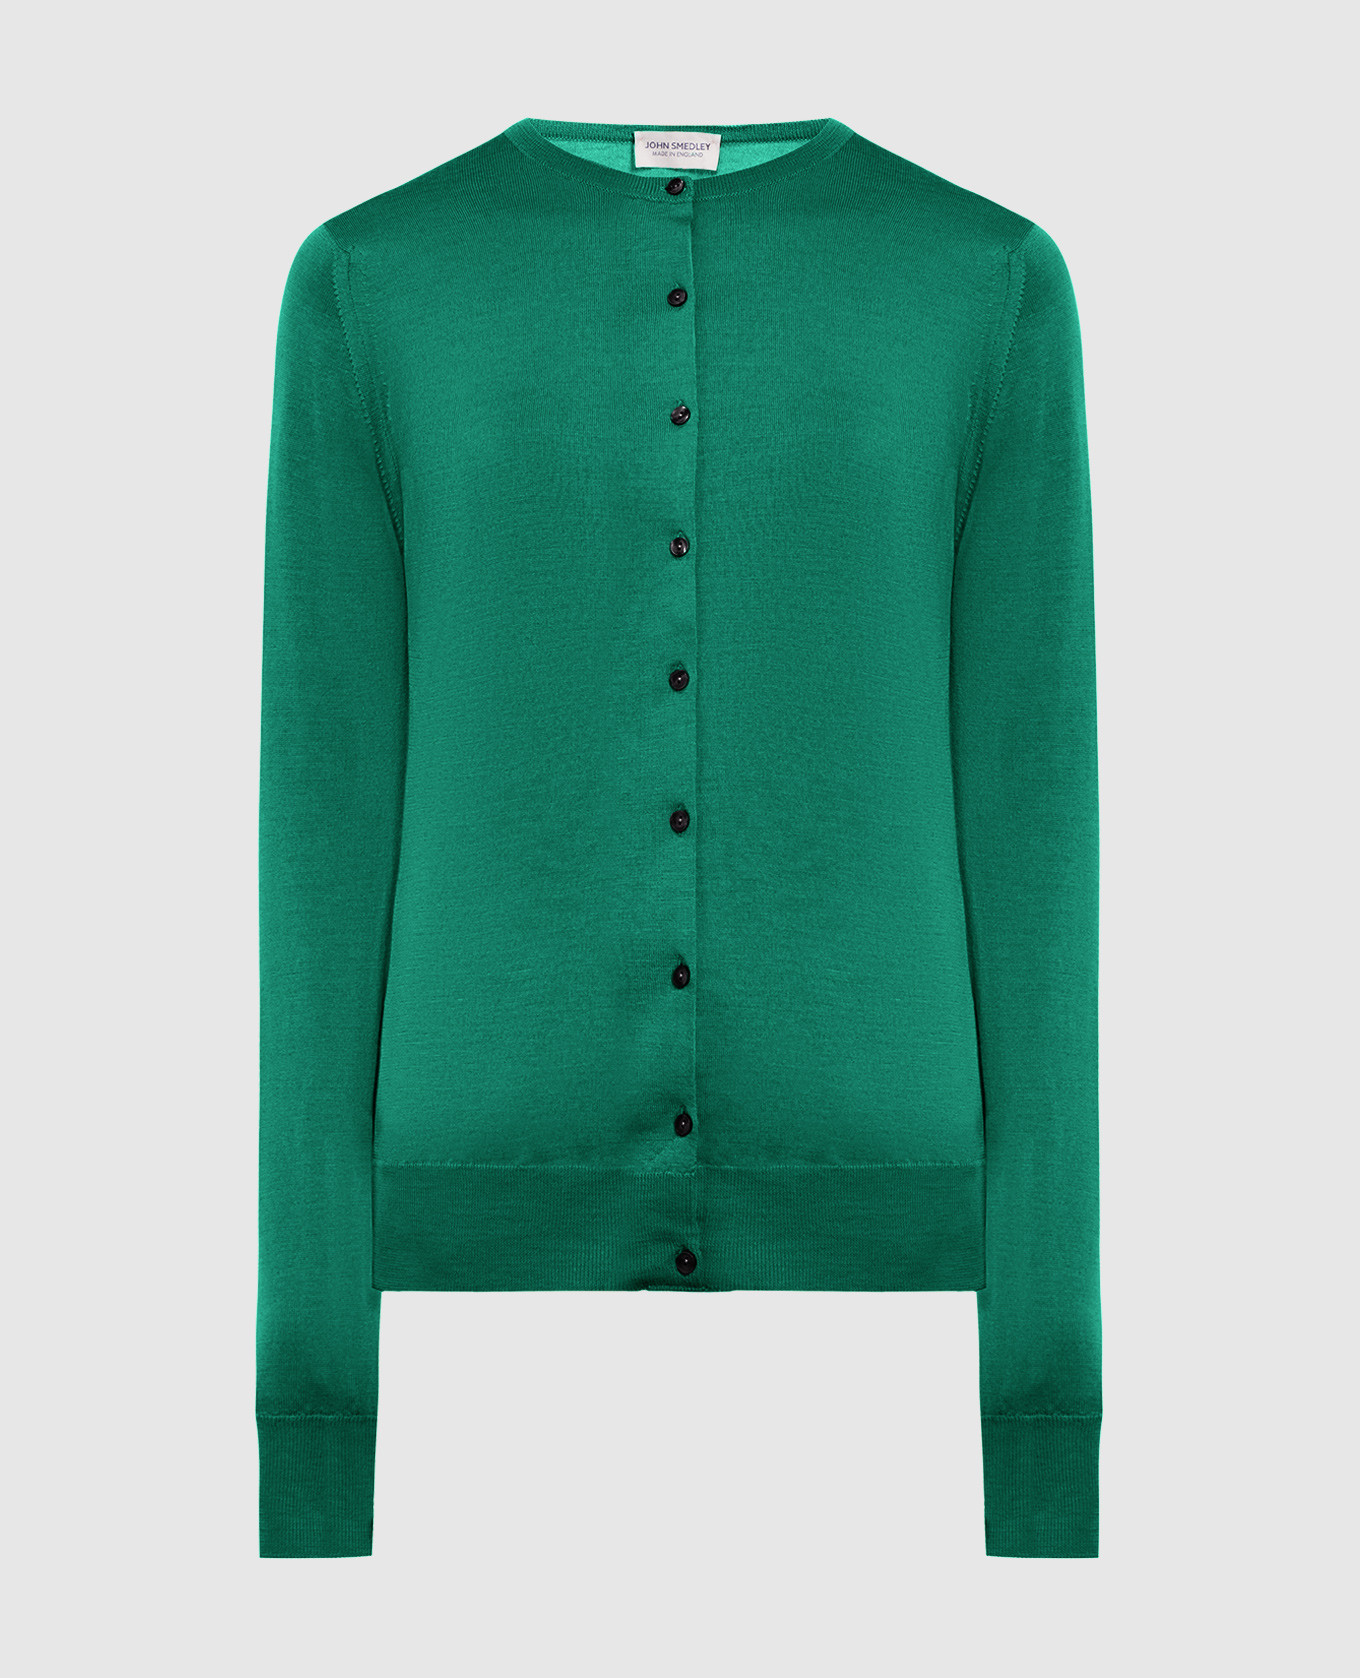 Green wool Buttercup cardigan